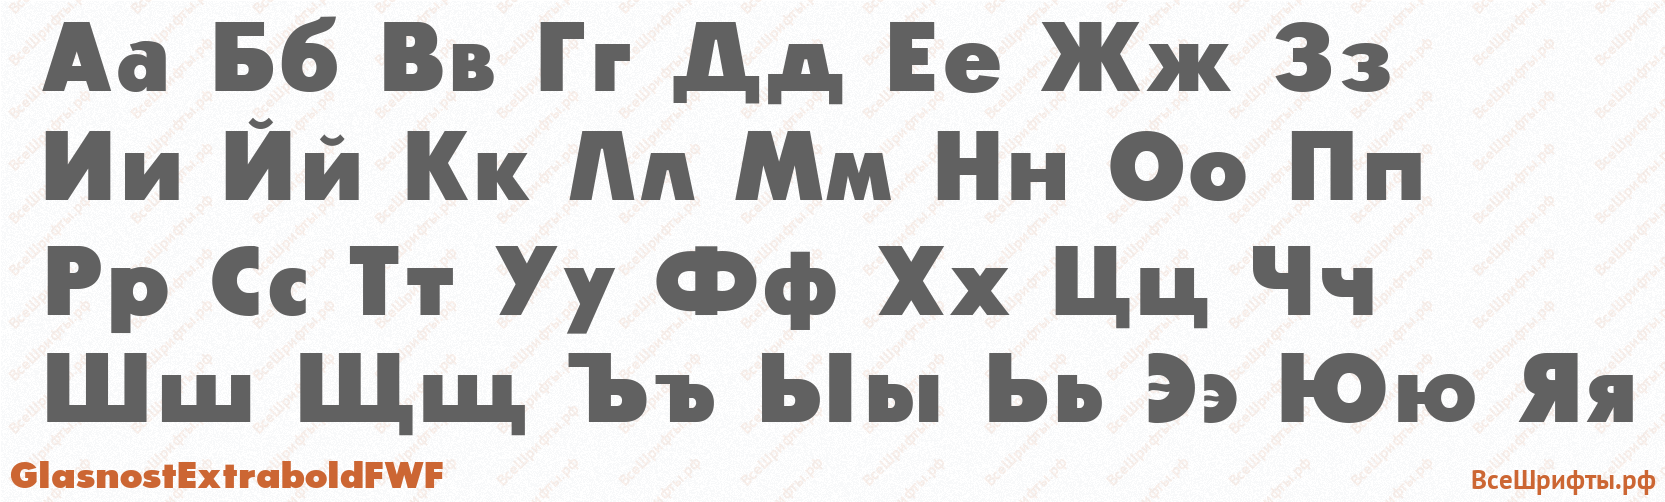 Шрифт GlasnostExtraboldFWF с русскими буквами